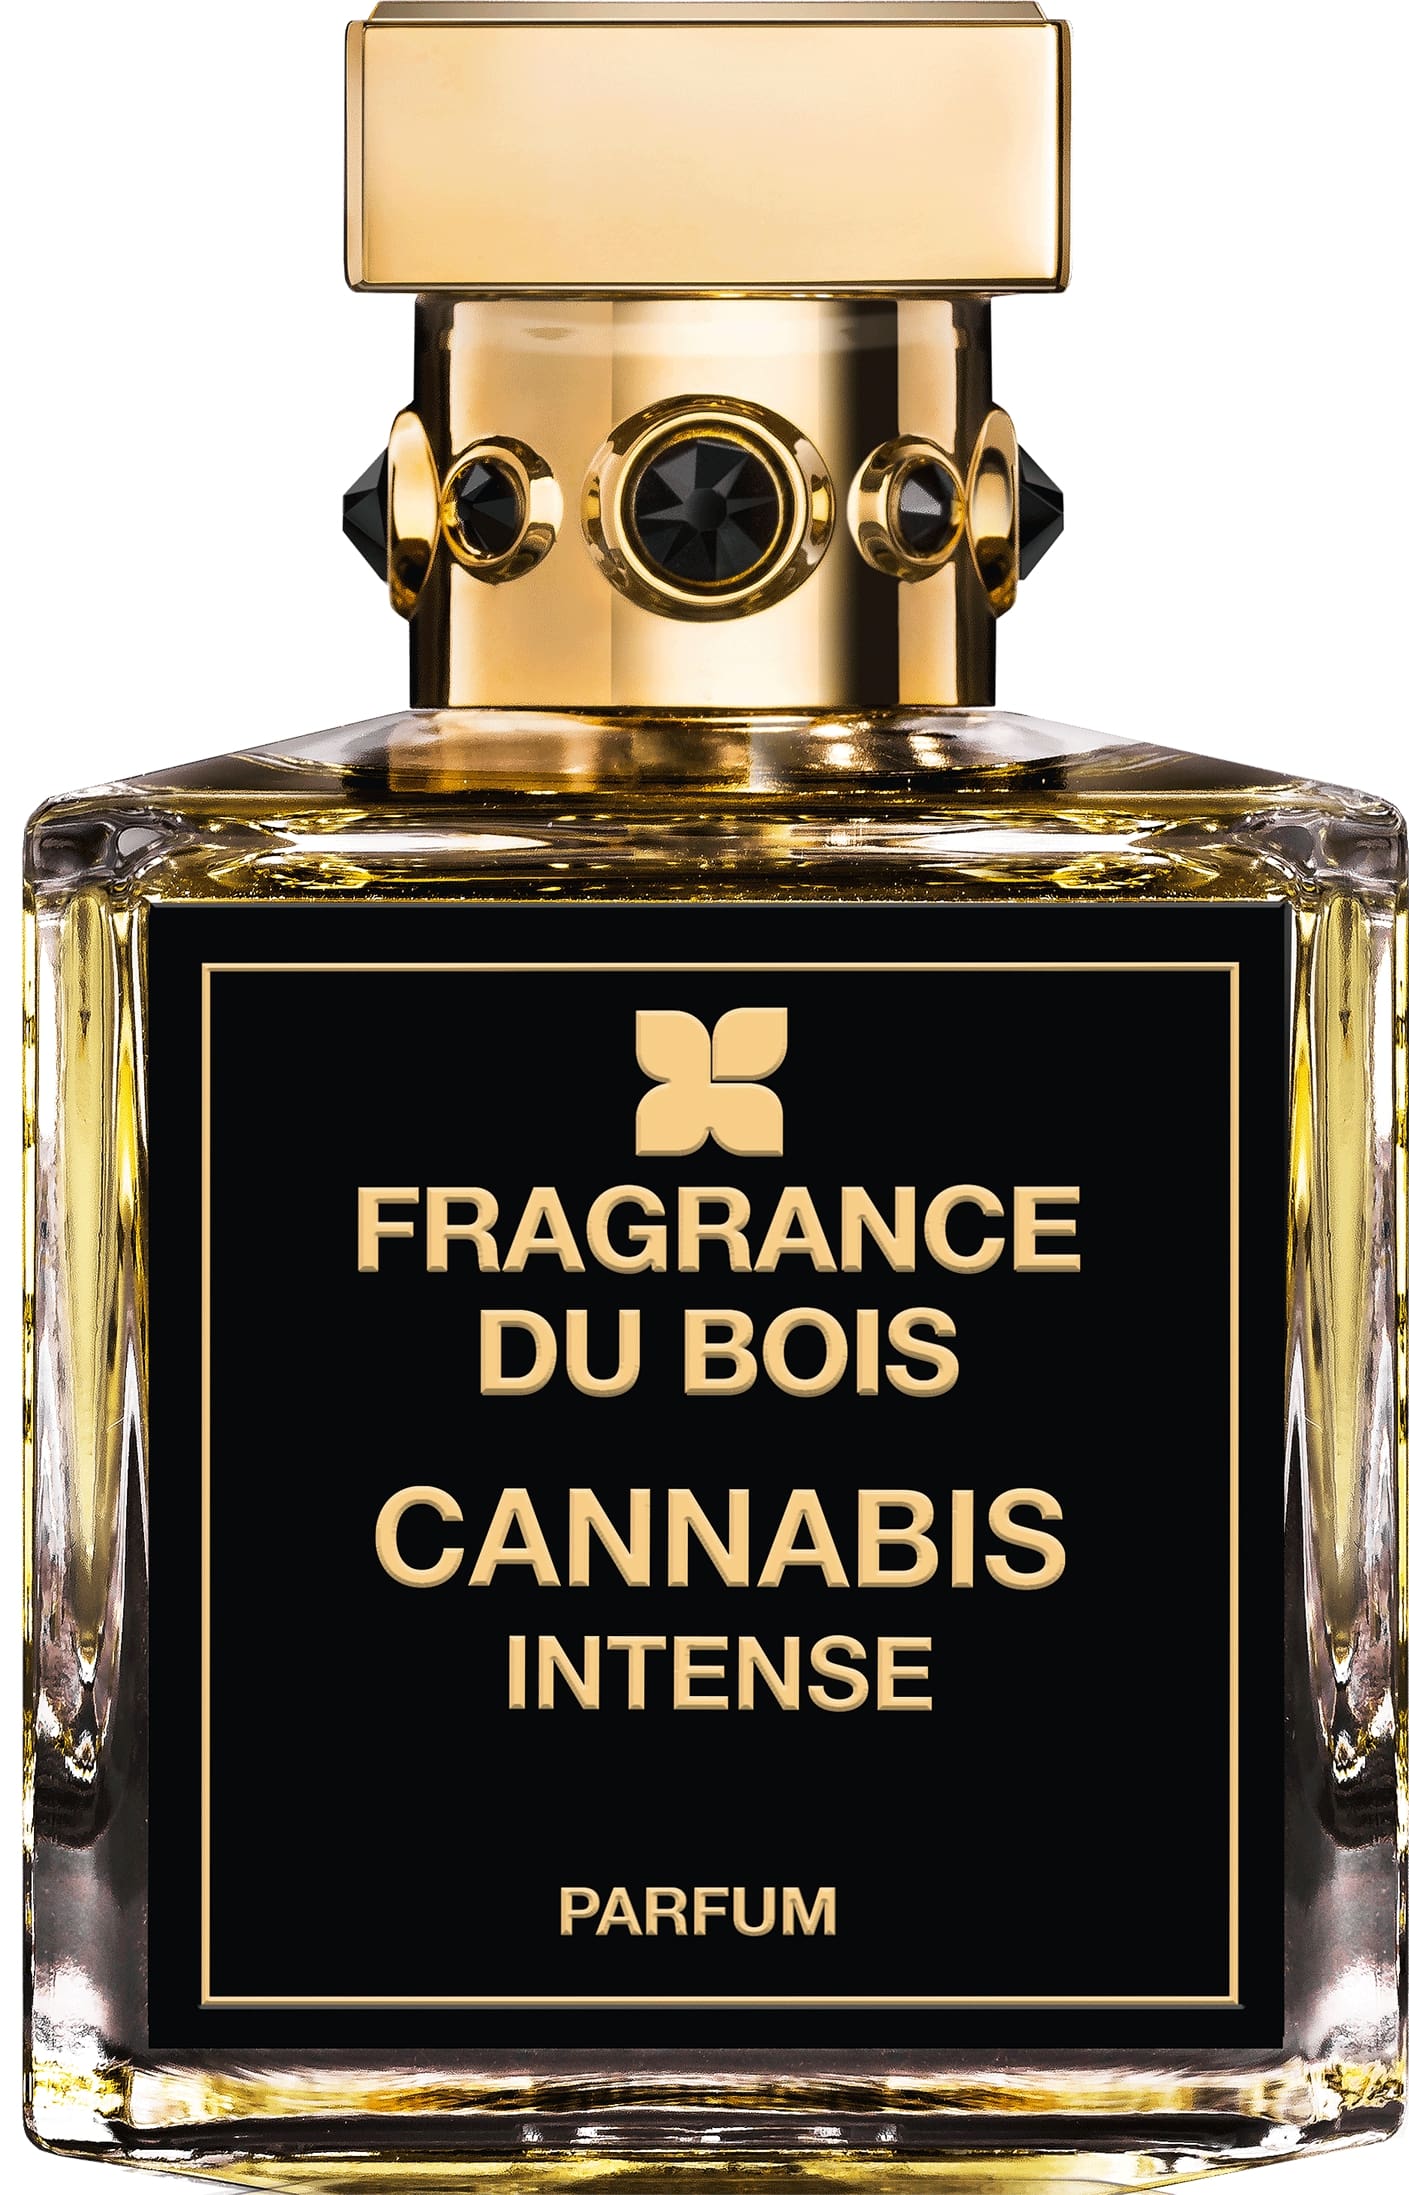 fragrance cannabis notes fragrances for 420